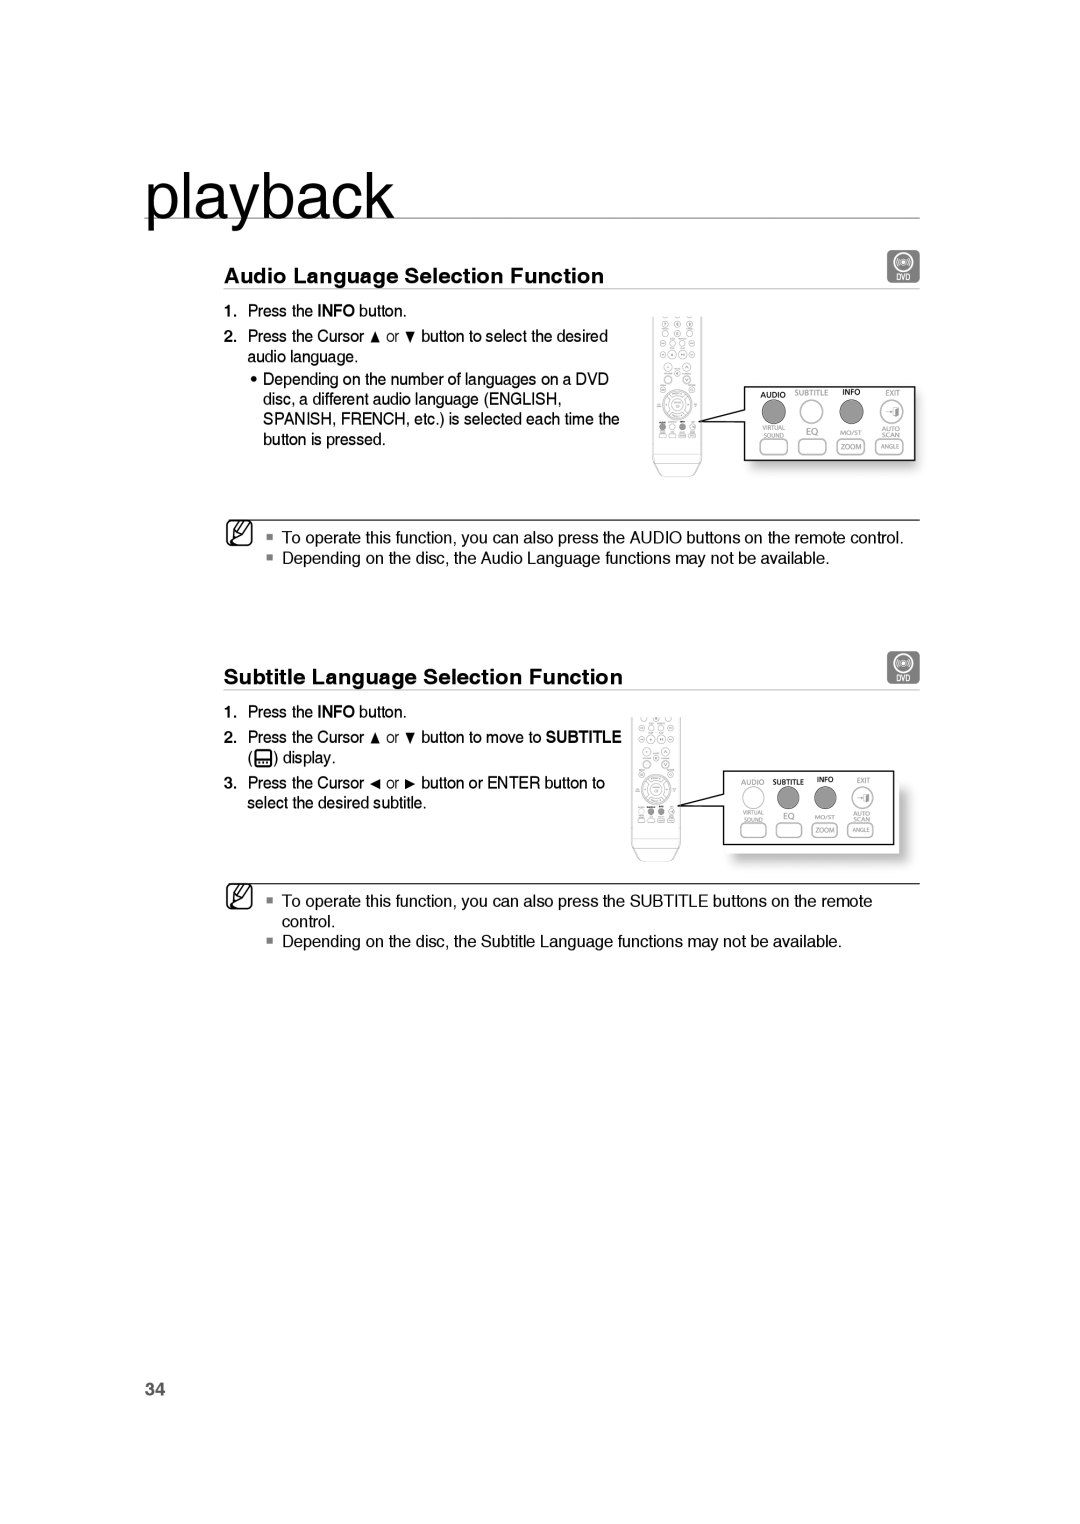 Samsung HE10T user manual Audio Language Selection Function, Subtitle Language Selection Function, playback 